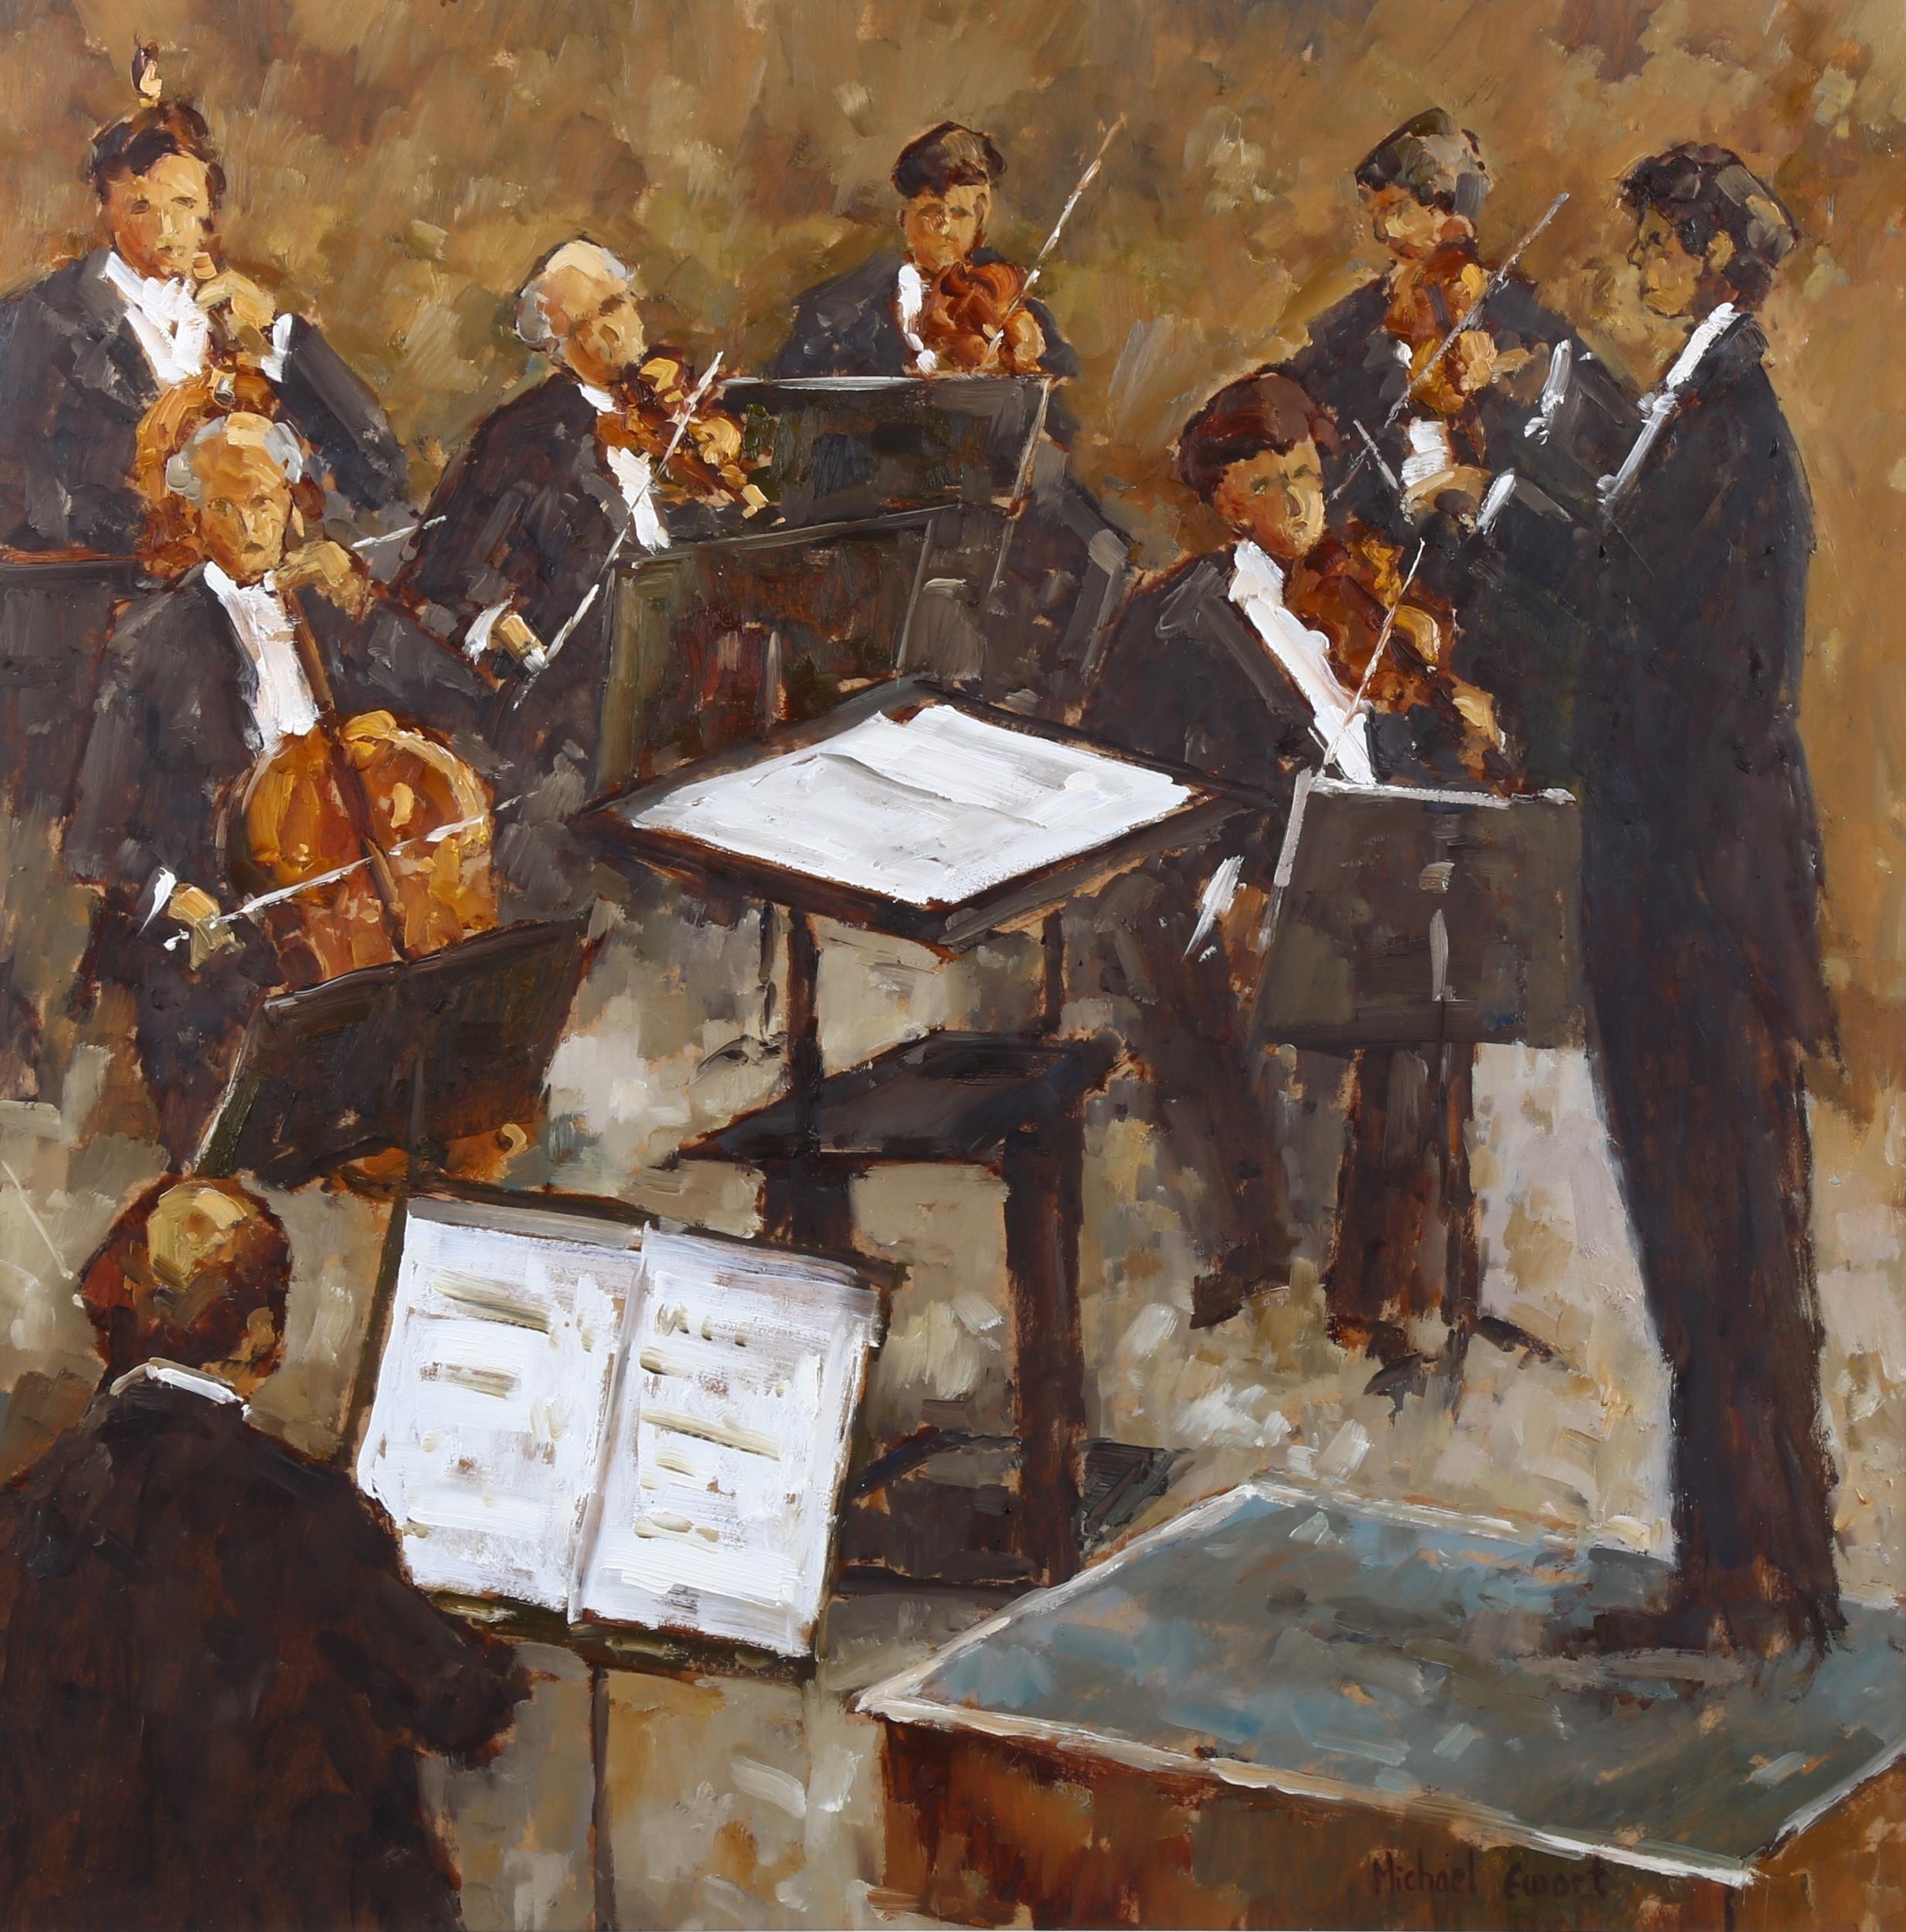 orchestra art